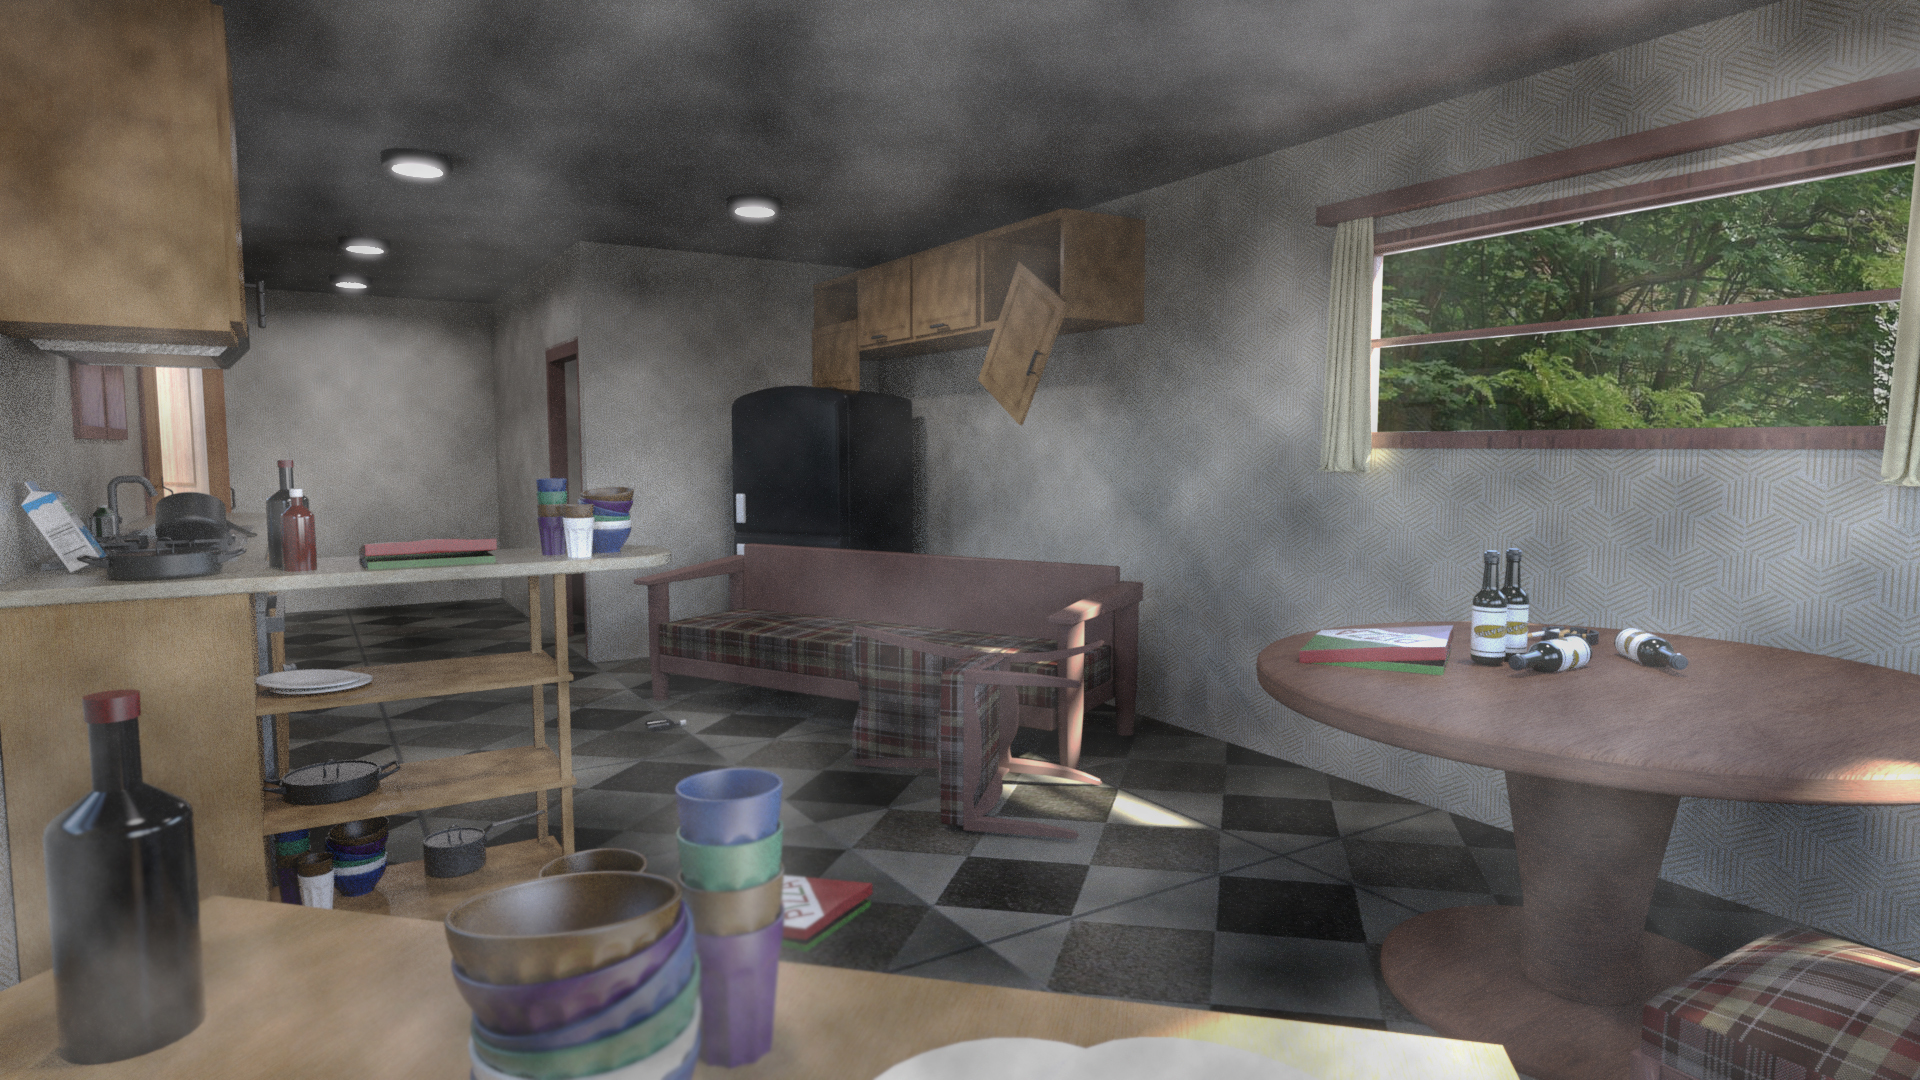 Dirty Kitchen by: Tesla3dCorp, 3D Models by Daz 3D